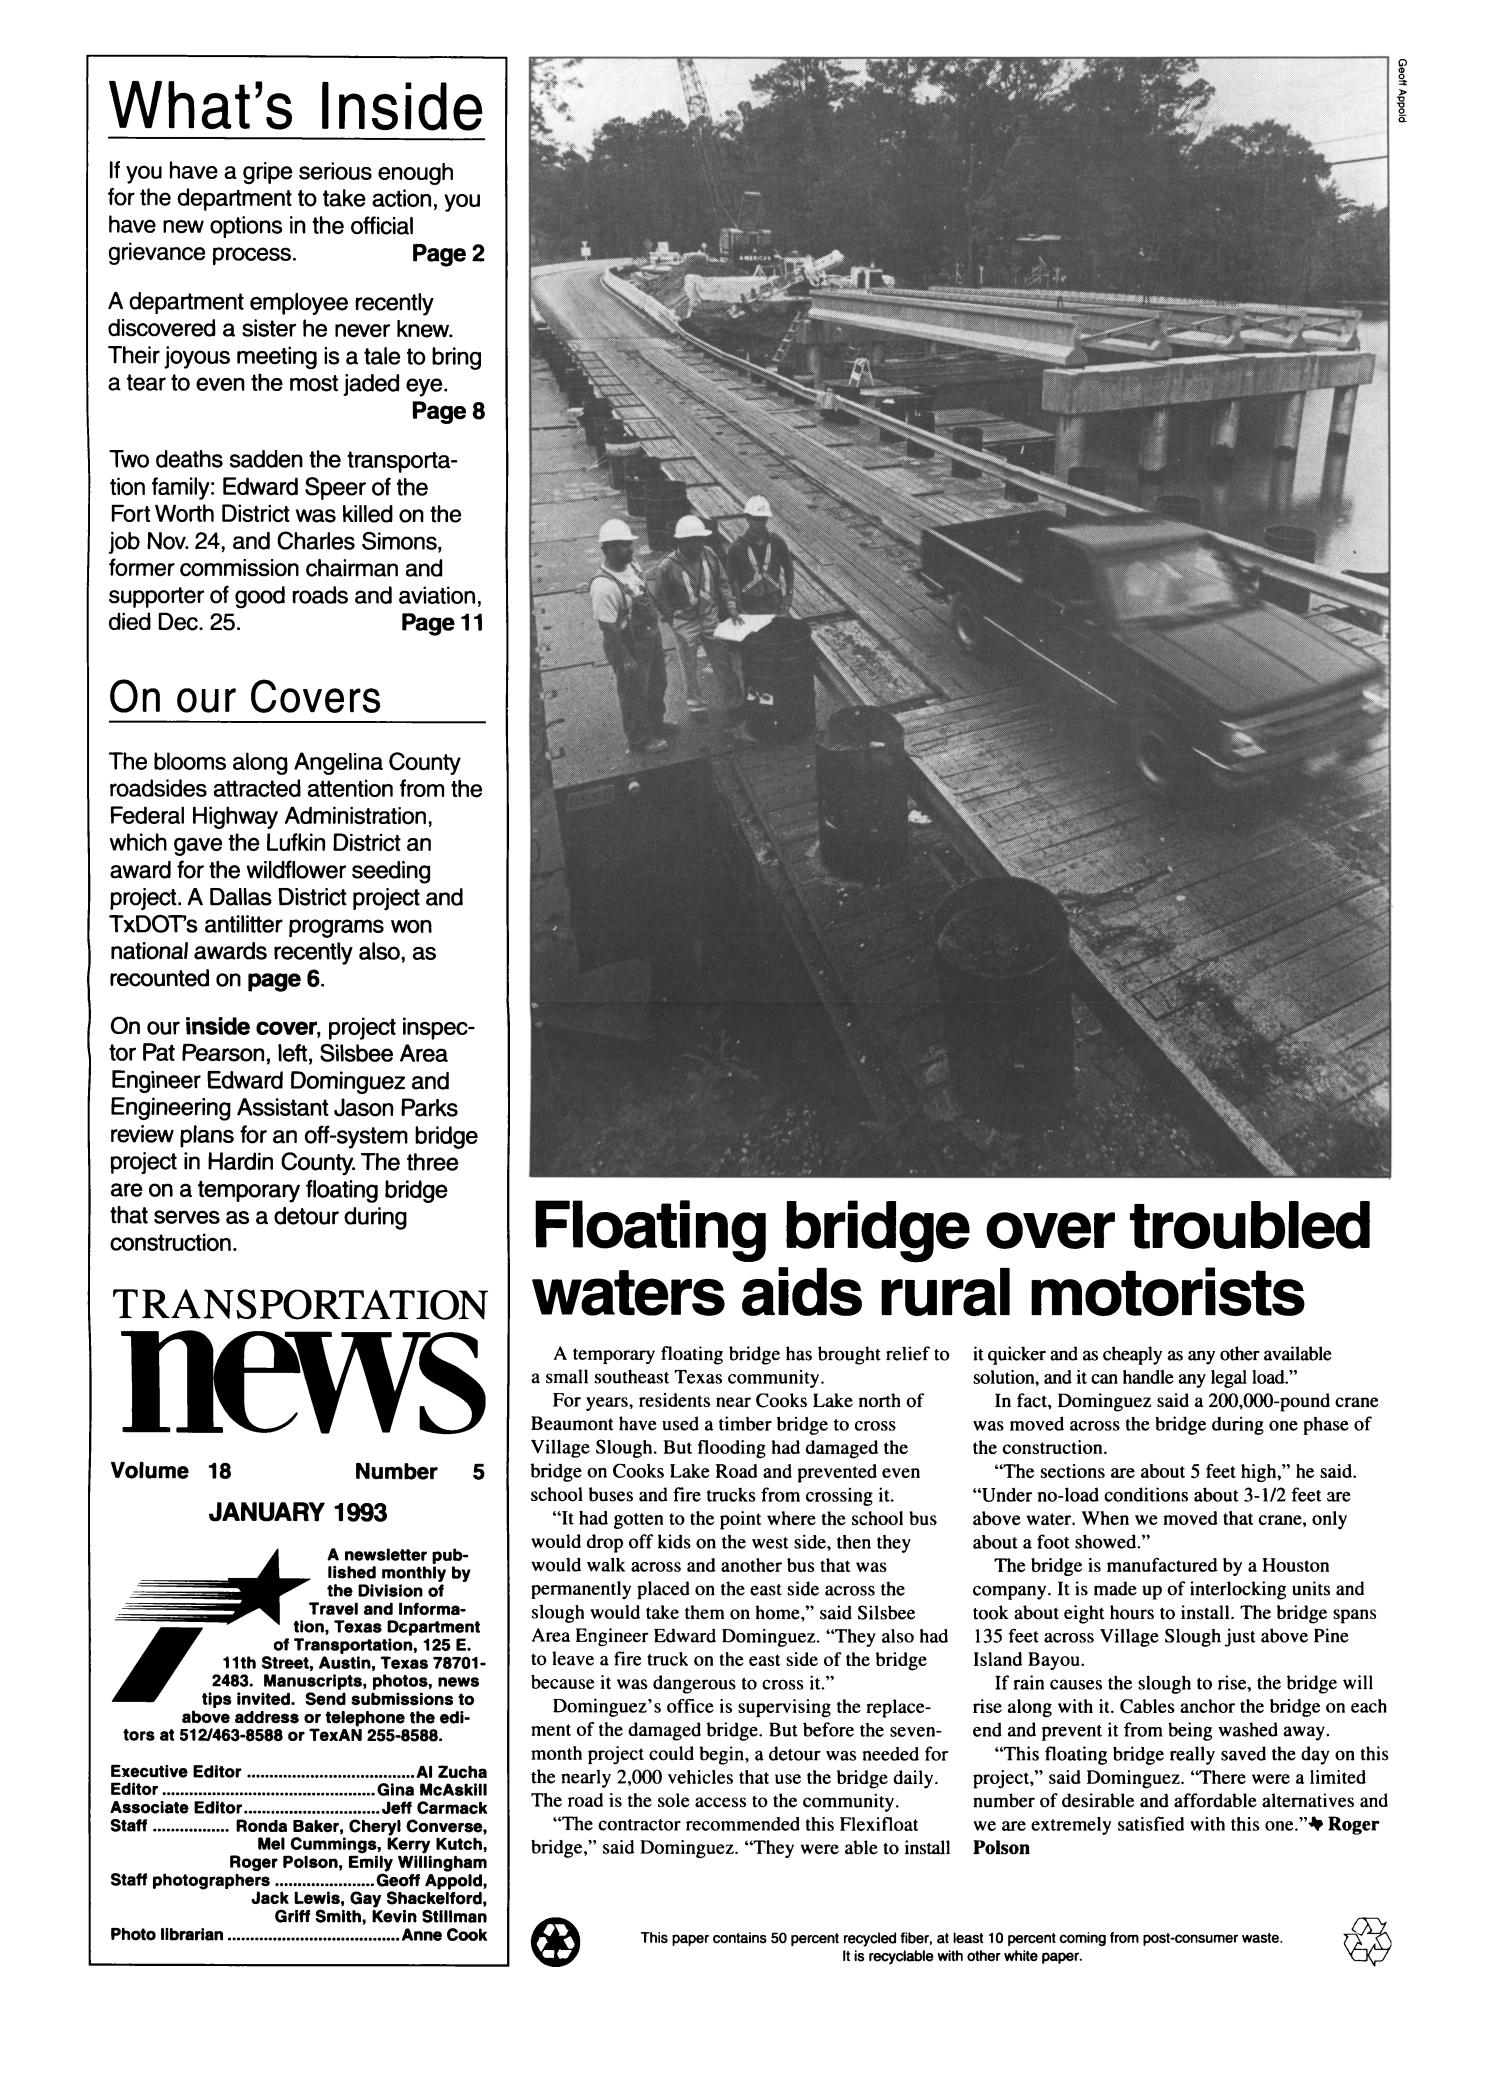 Transportation News, Volume 18, Number 5, January 1993
                                                
                                                    1
                                                